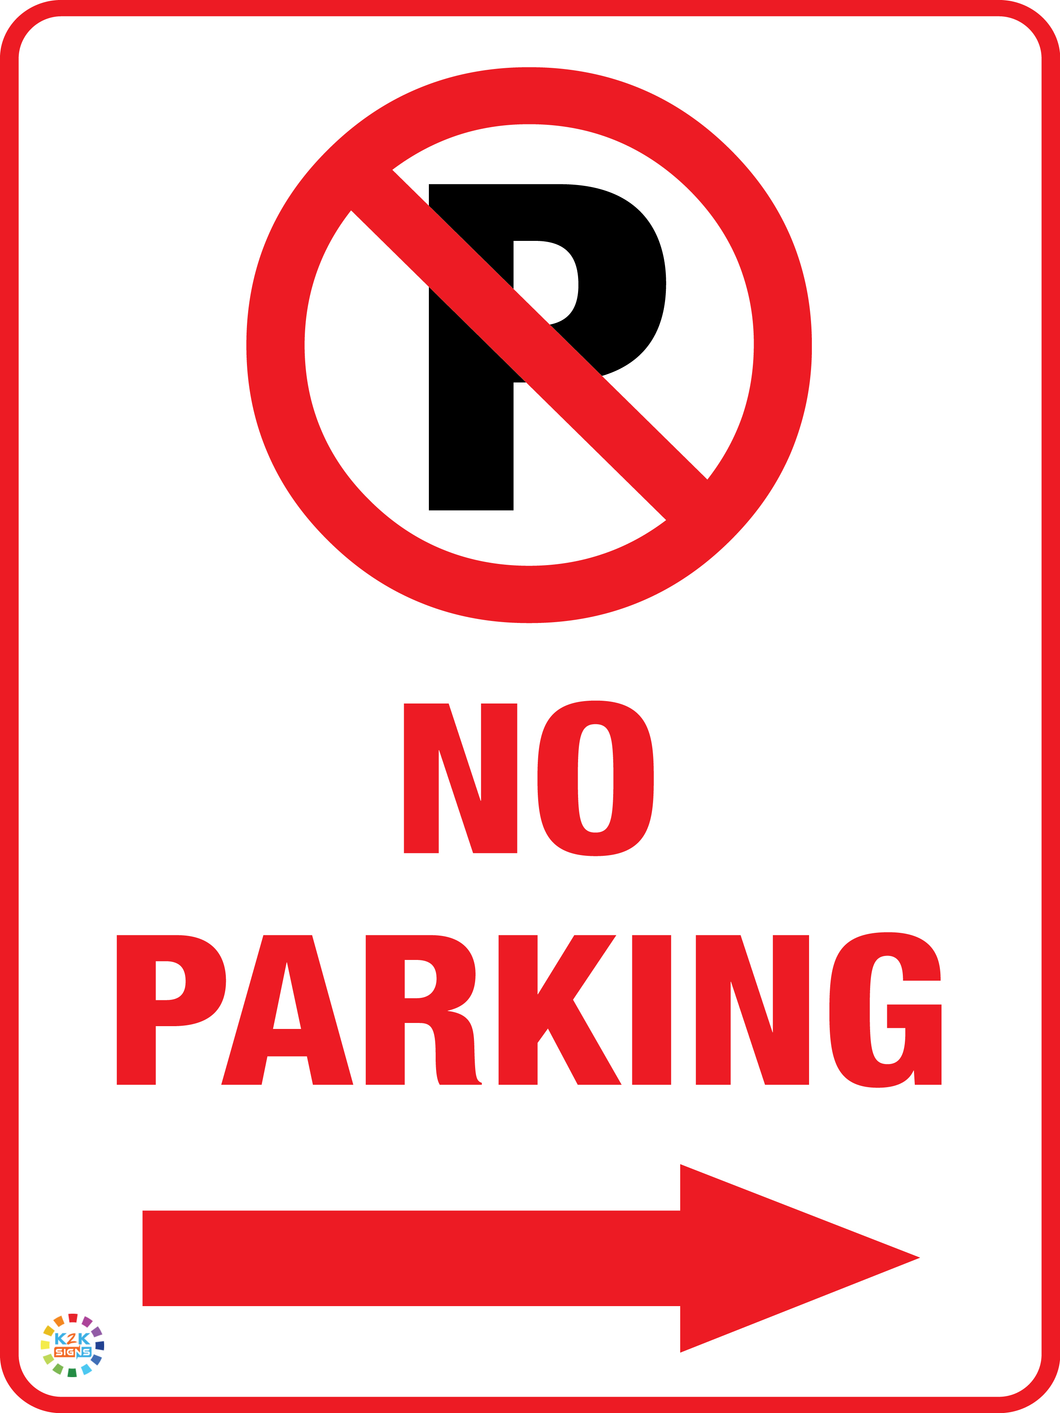 No Parking Right Arrow Sign